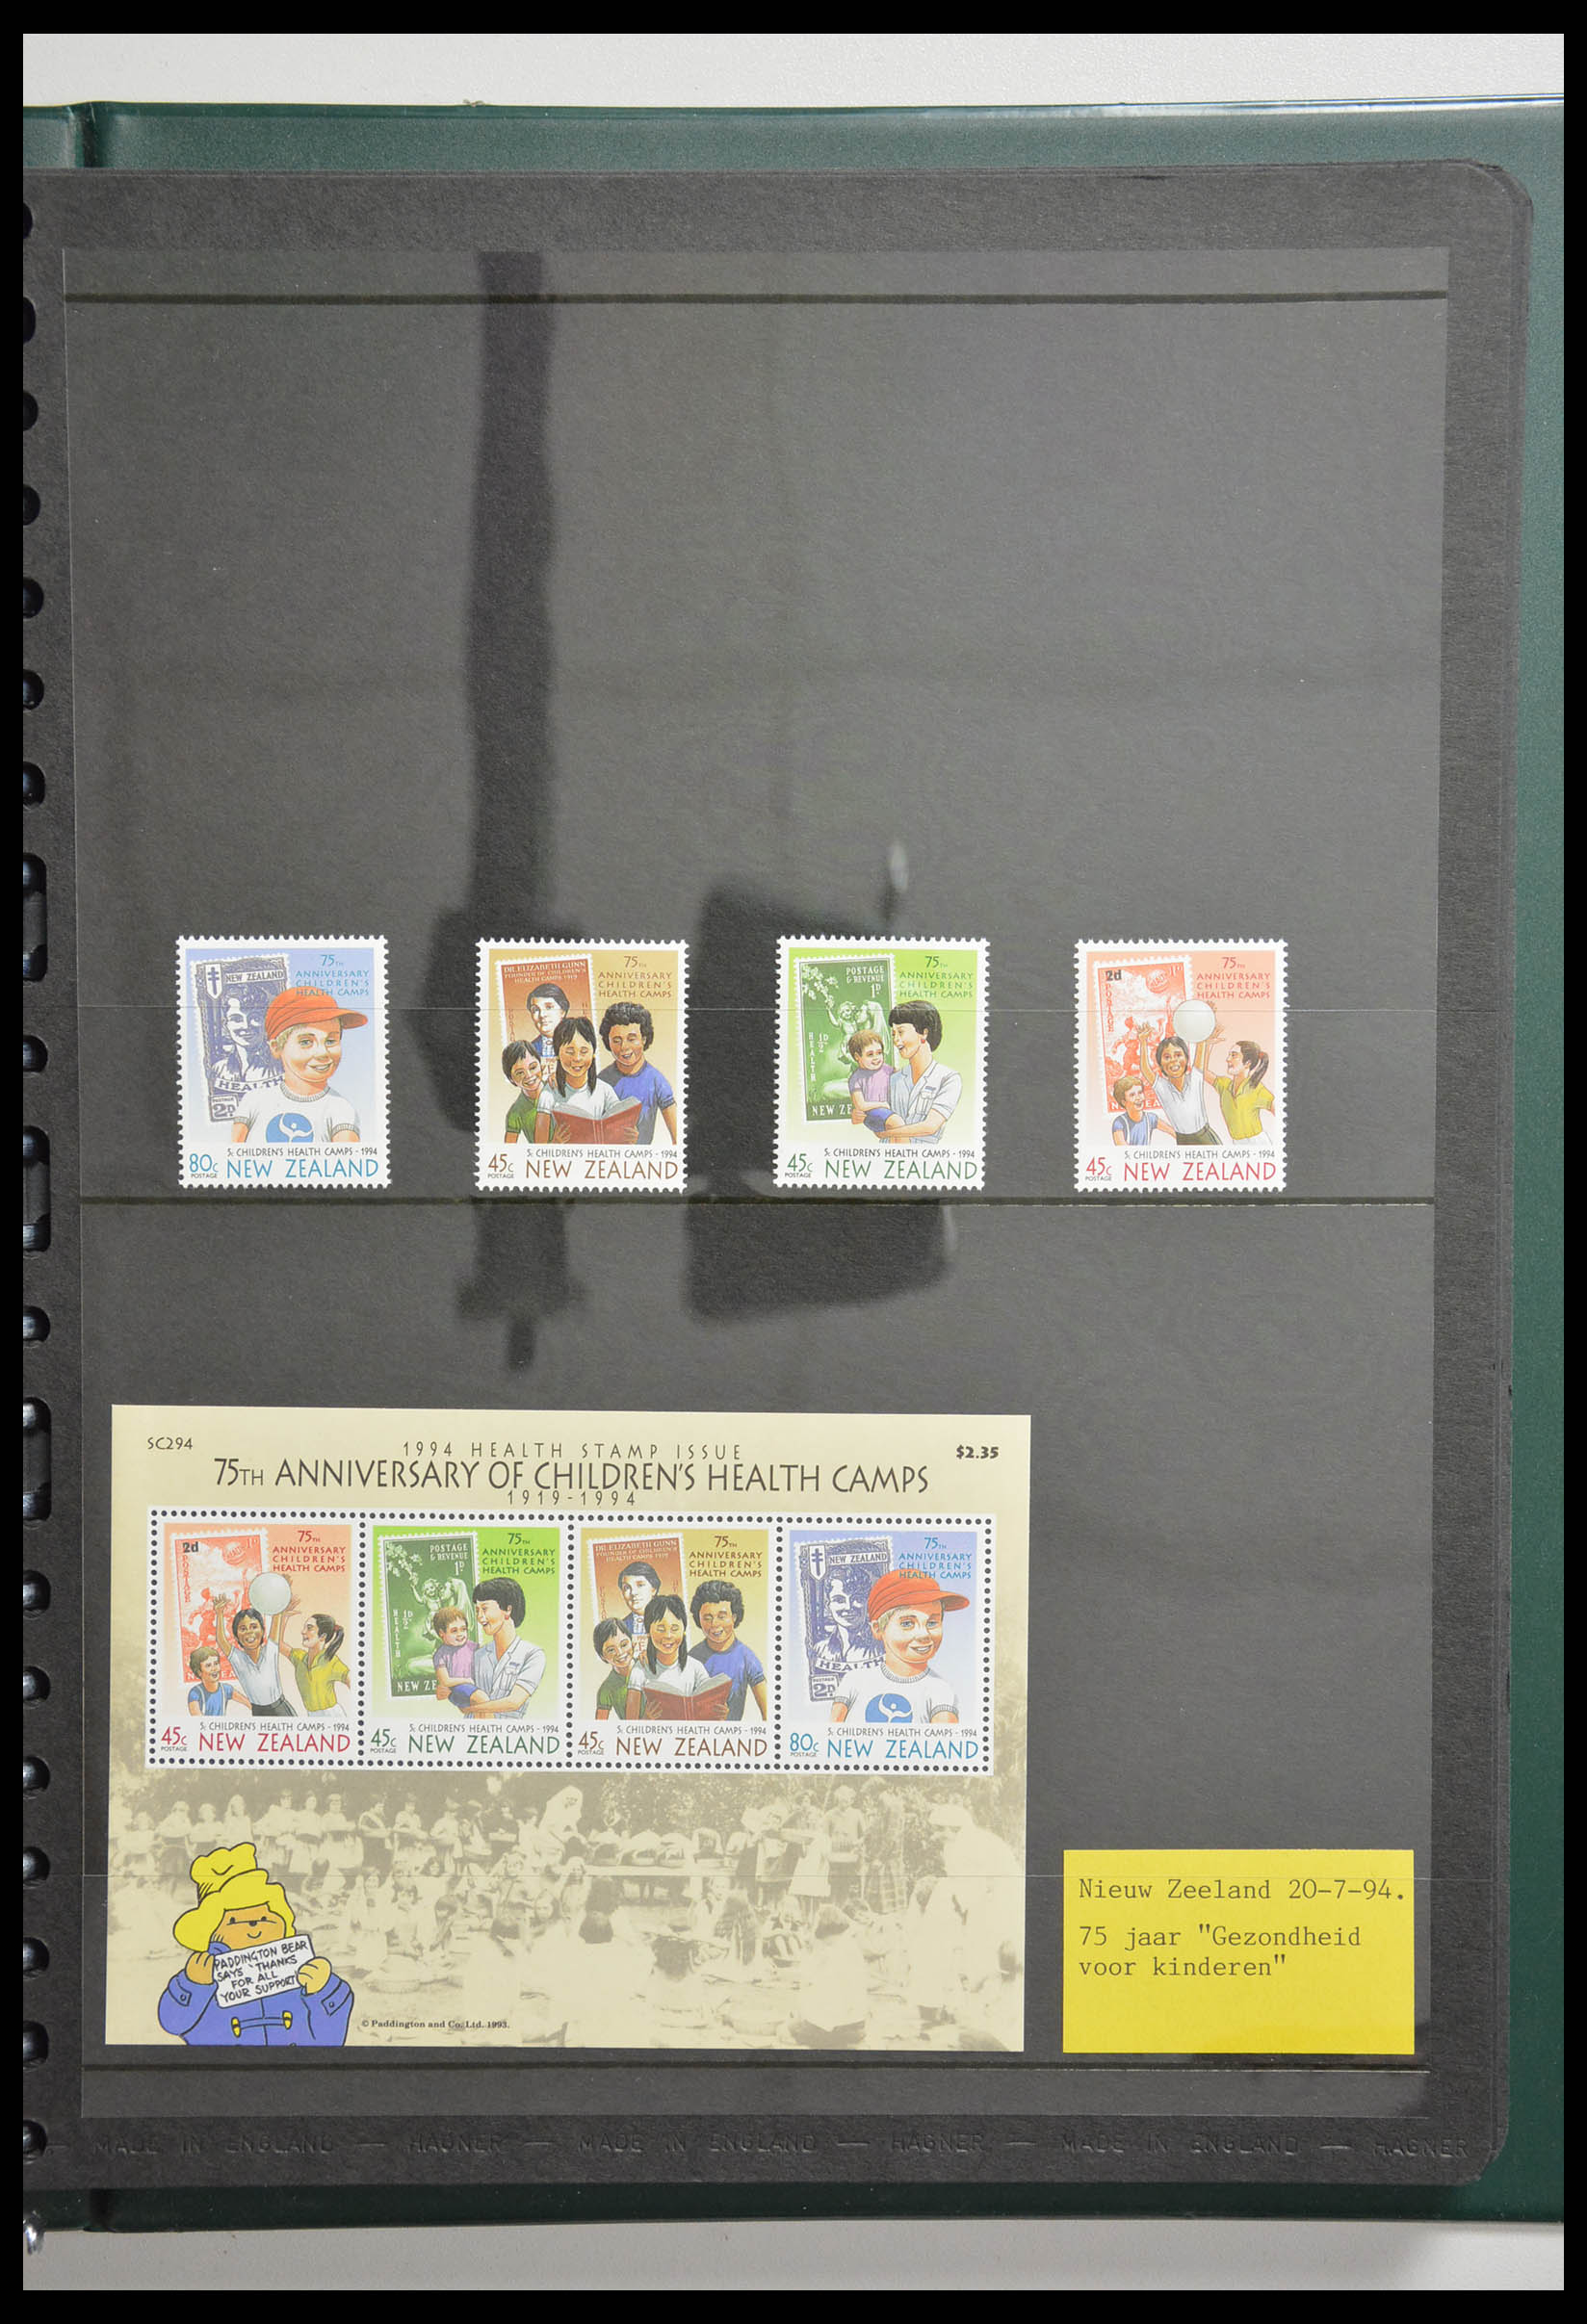 28337 101 - 28337 Postzegel op postzegel 1840-2001.